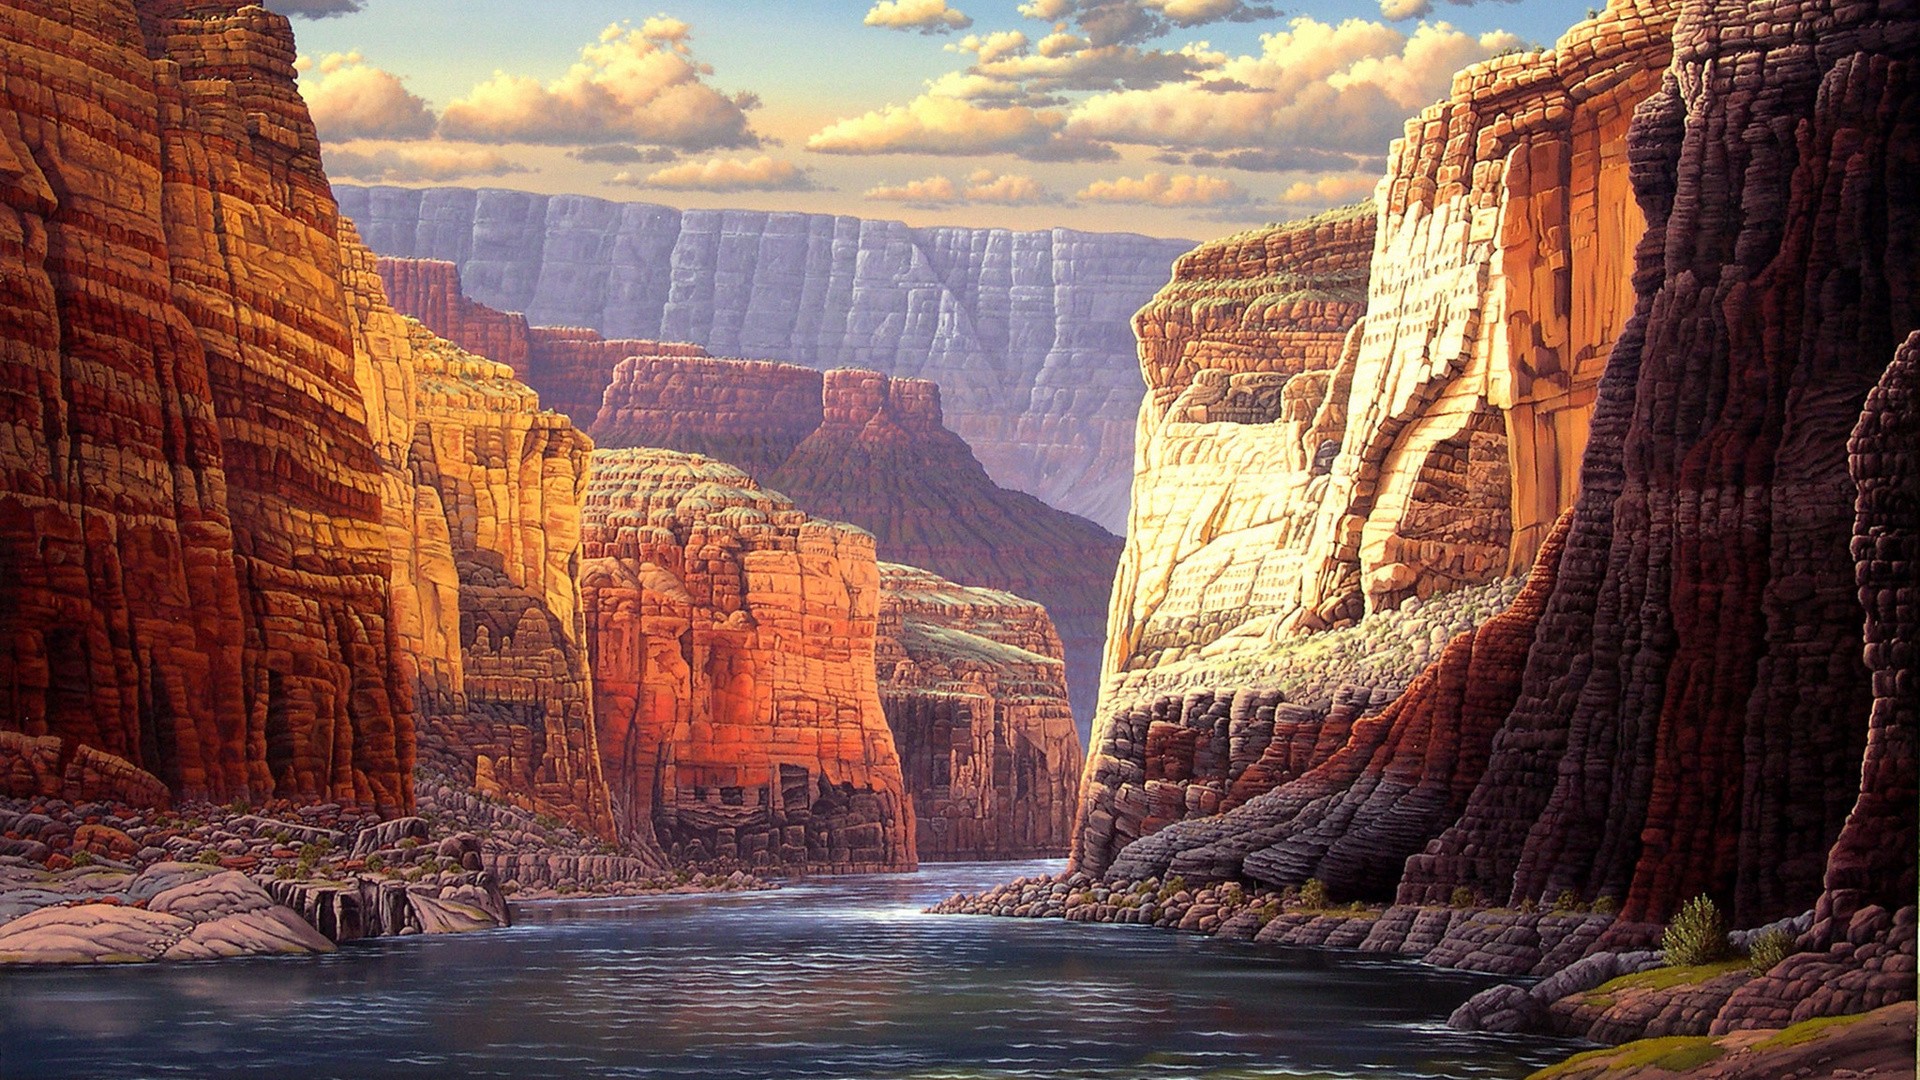 492364 Nature Landscape Digital Art Mountains Clouds Canyon Valley River Sunlight Rock Stones 